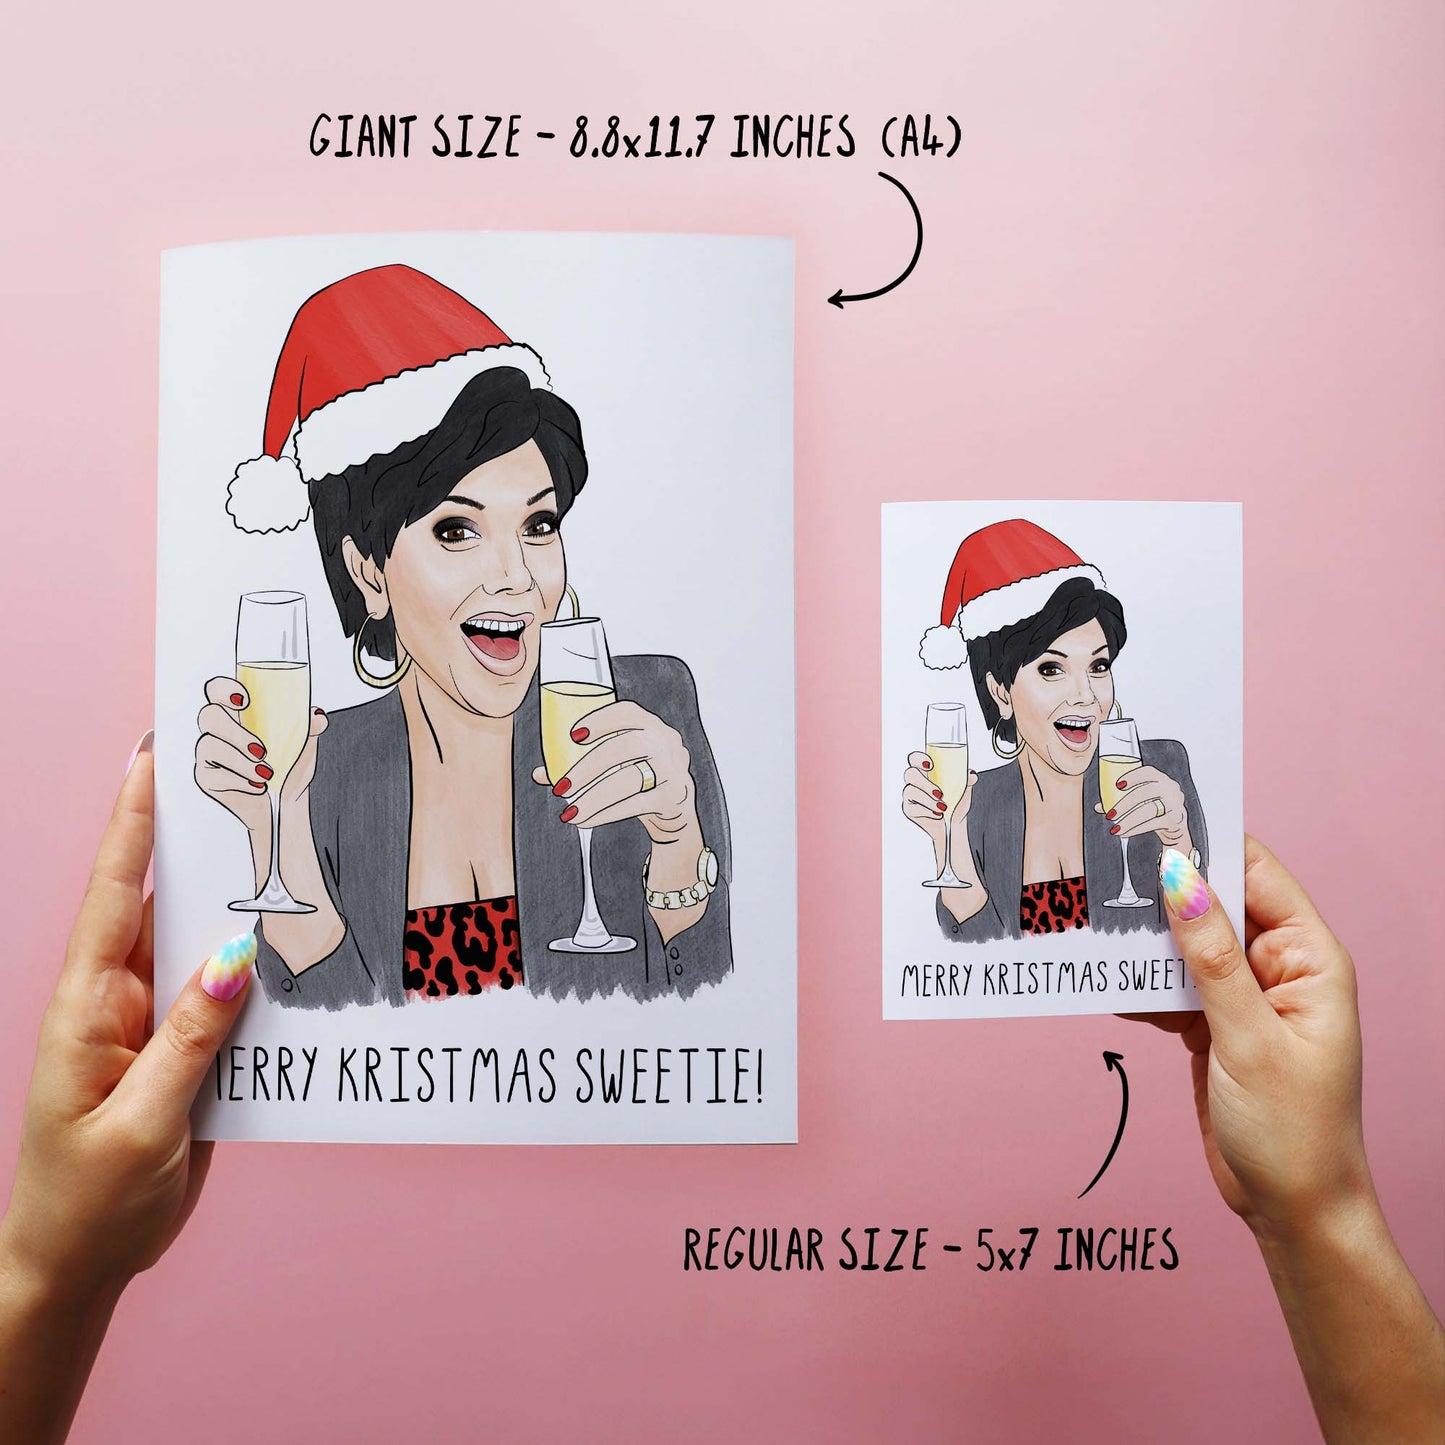 Merry Kristmas - Funny Xmas Greetings Card